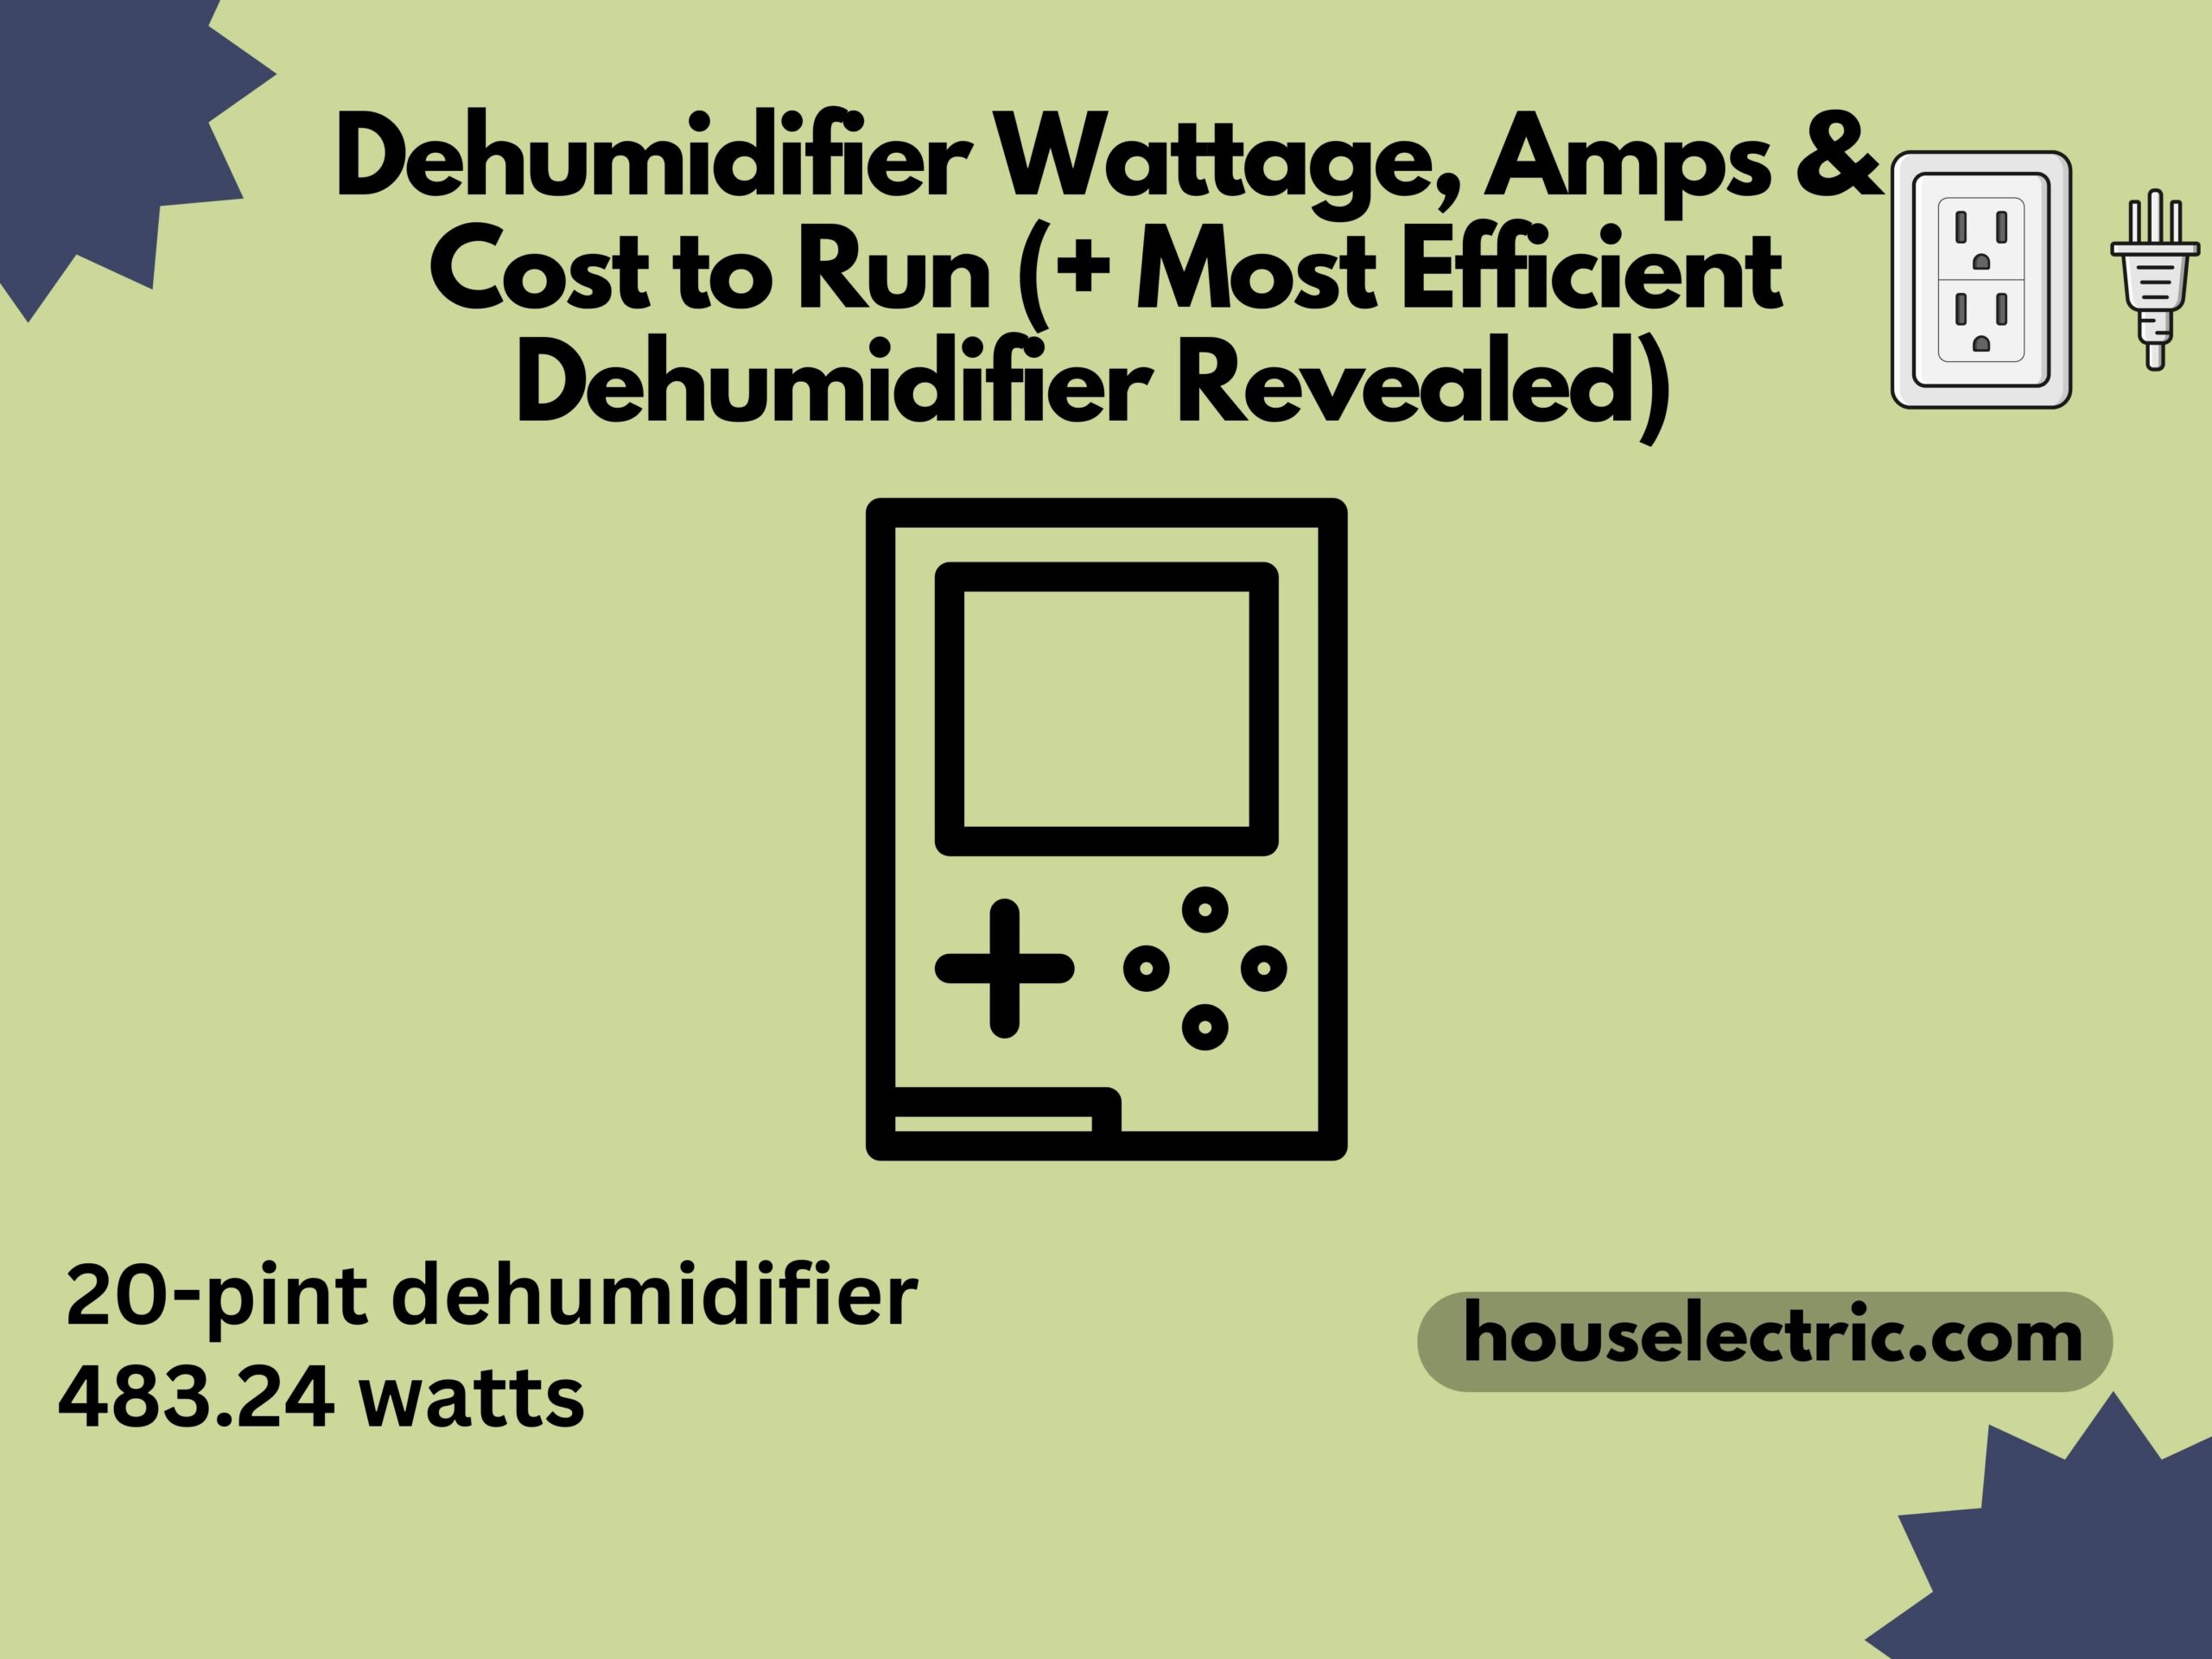 Dehumidifier Wattage